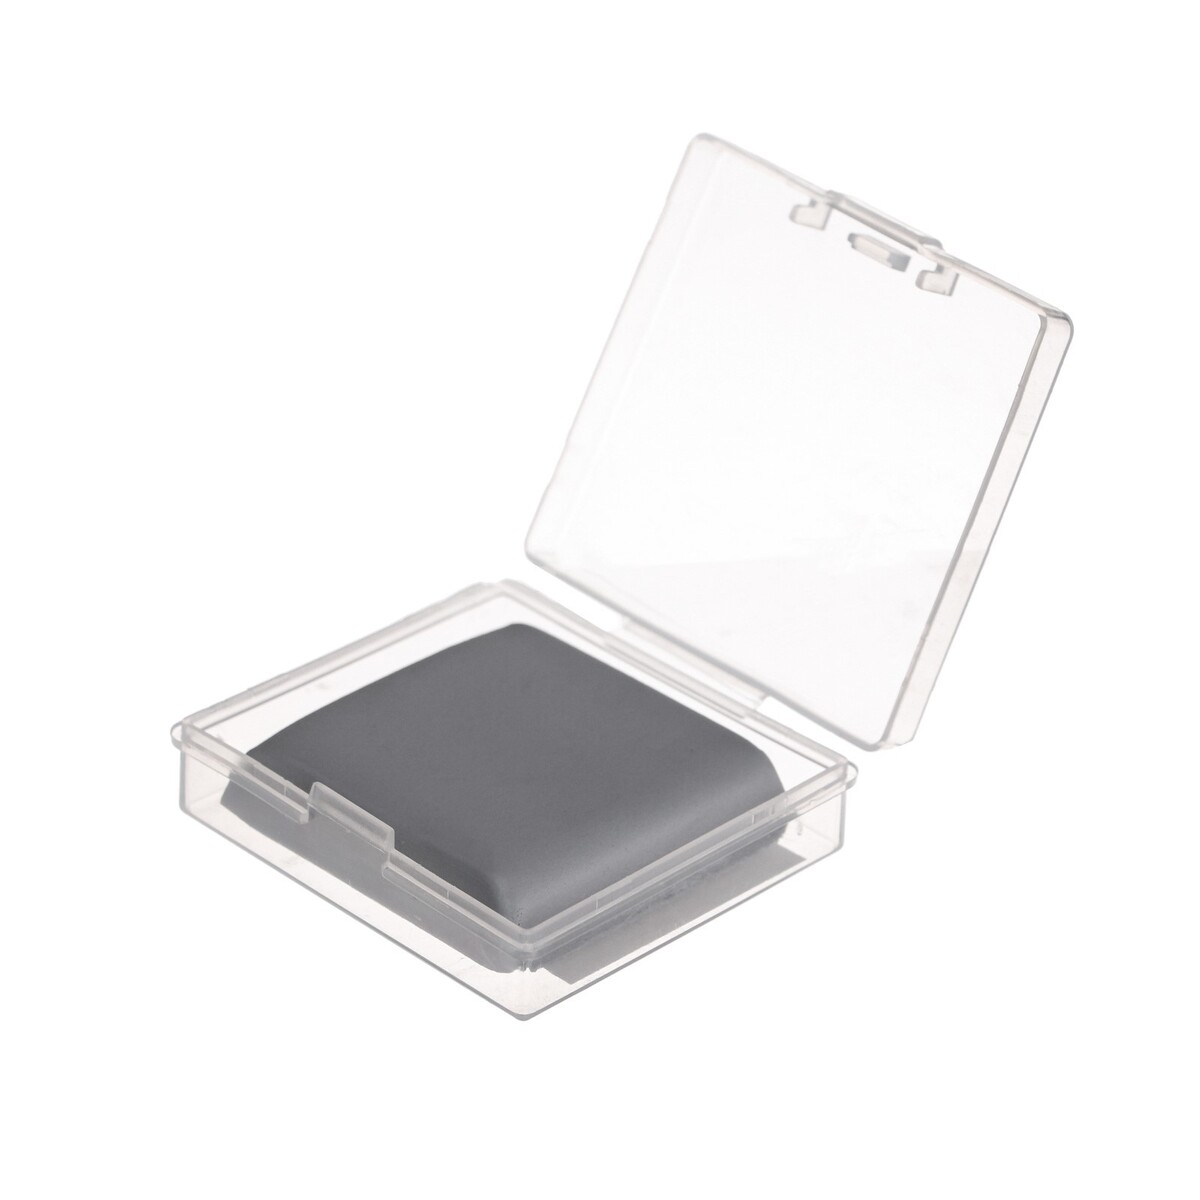 Ластик клячка прямоугольный серый, размер 37 х 35 х 0,9 мм, в коробочке художественный ластик клячка